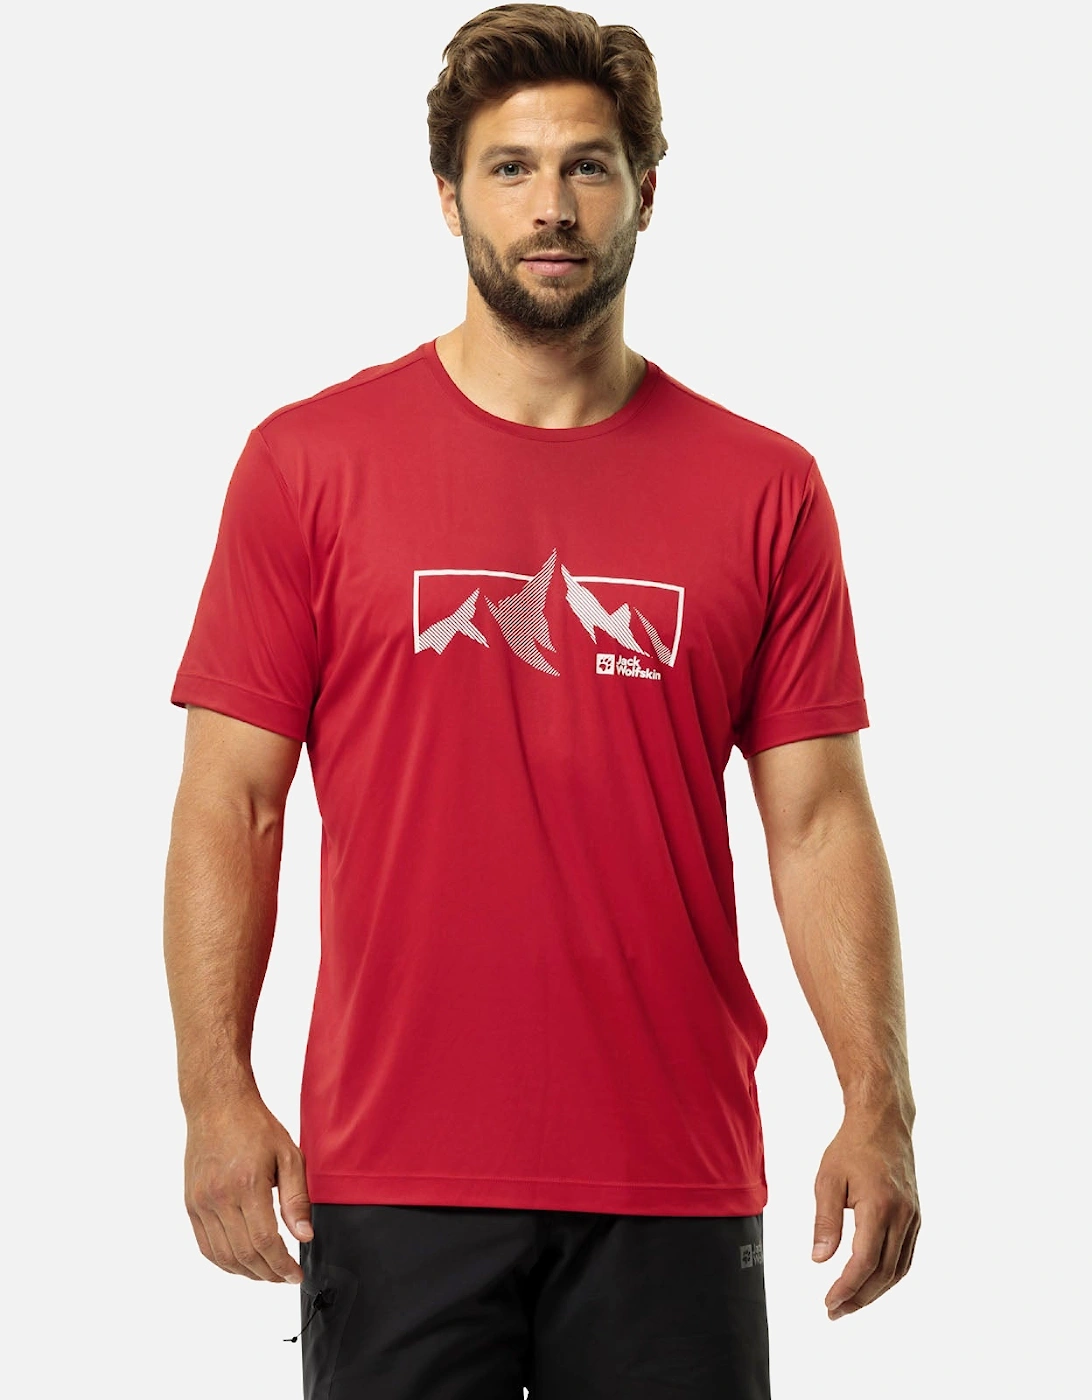 Mens Peak Graphic Short Sleeve T-Shirt